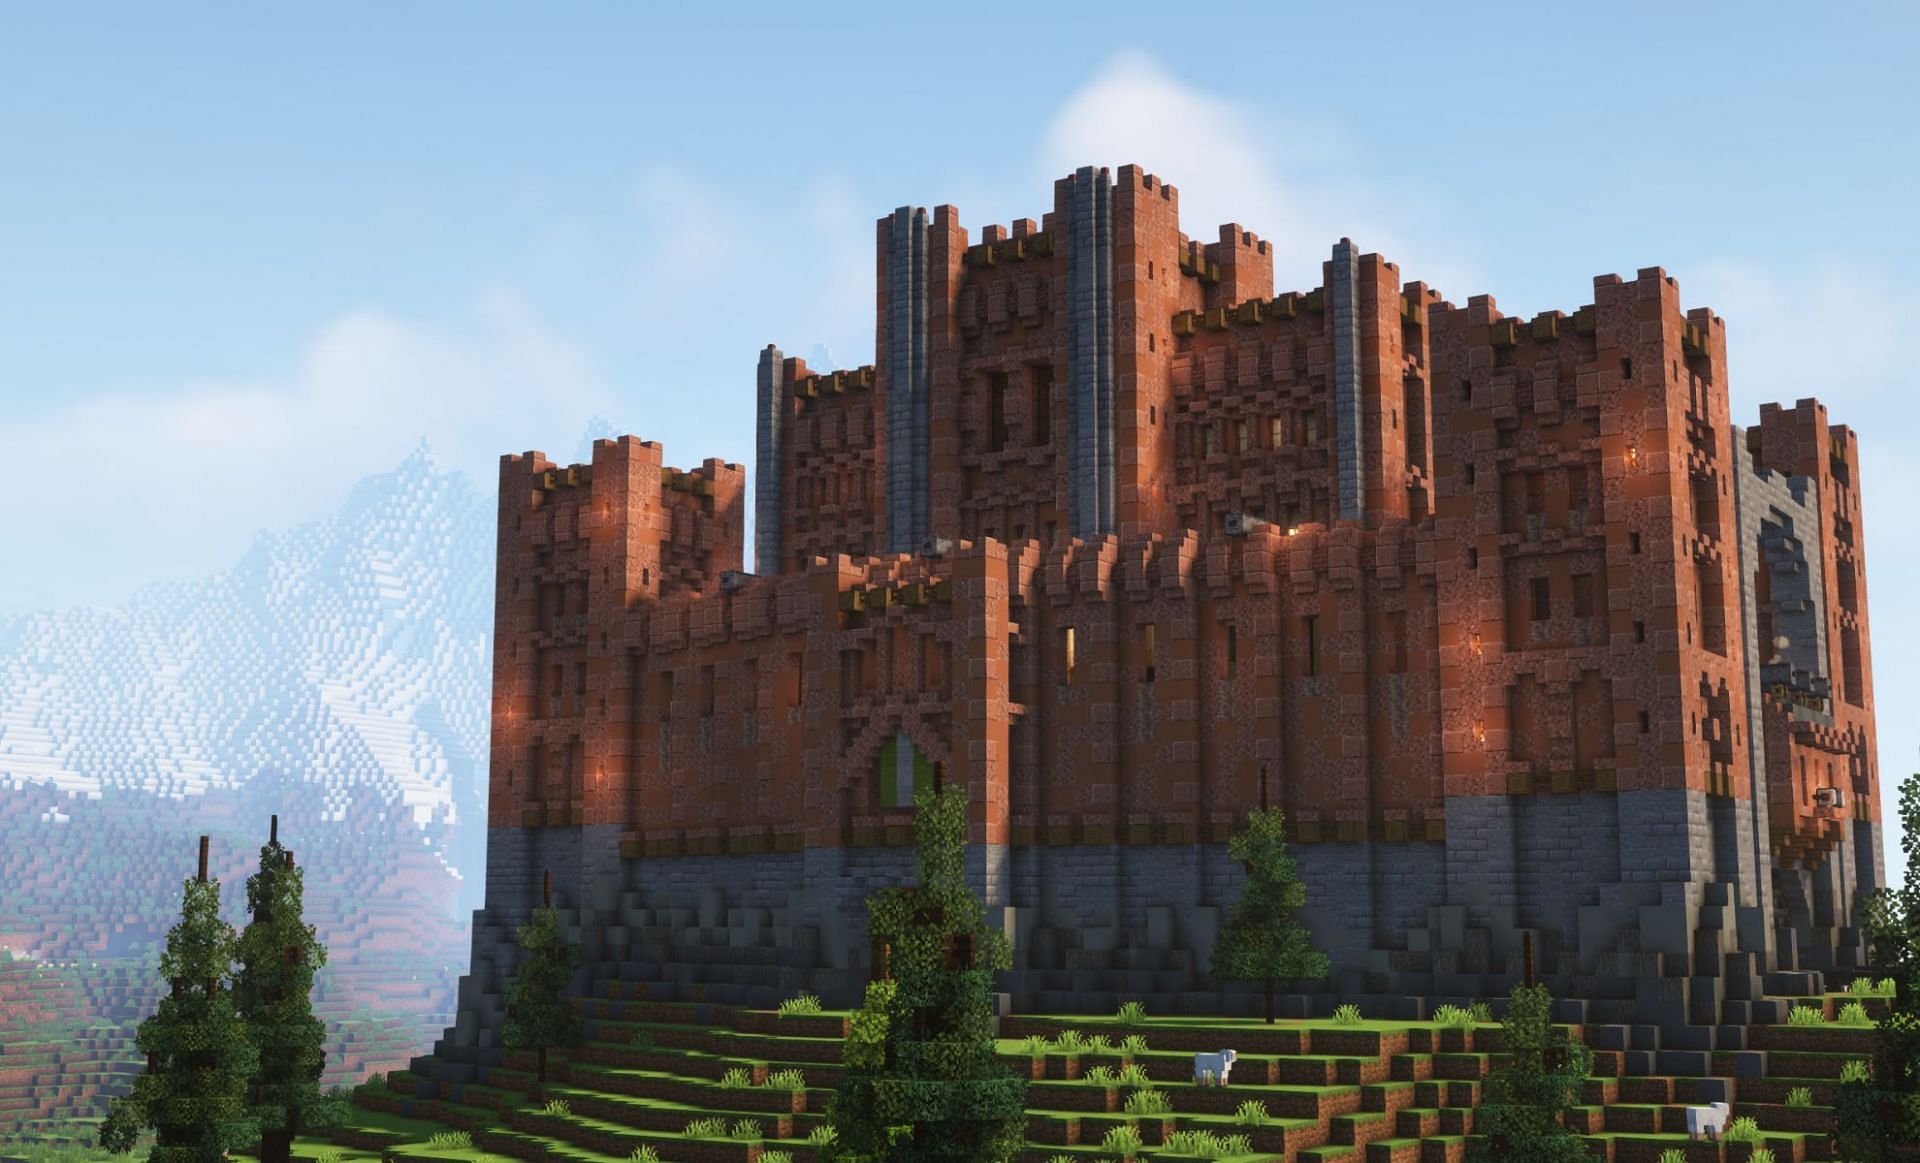 The stunning Survival castle (Image via u/PoisonPal24 on Reddit)